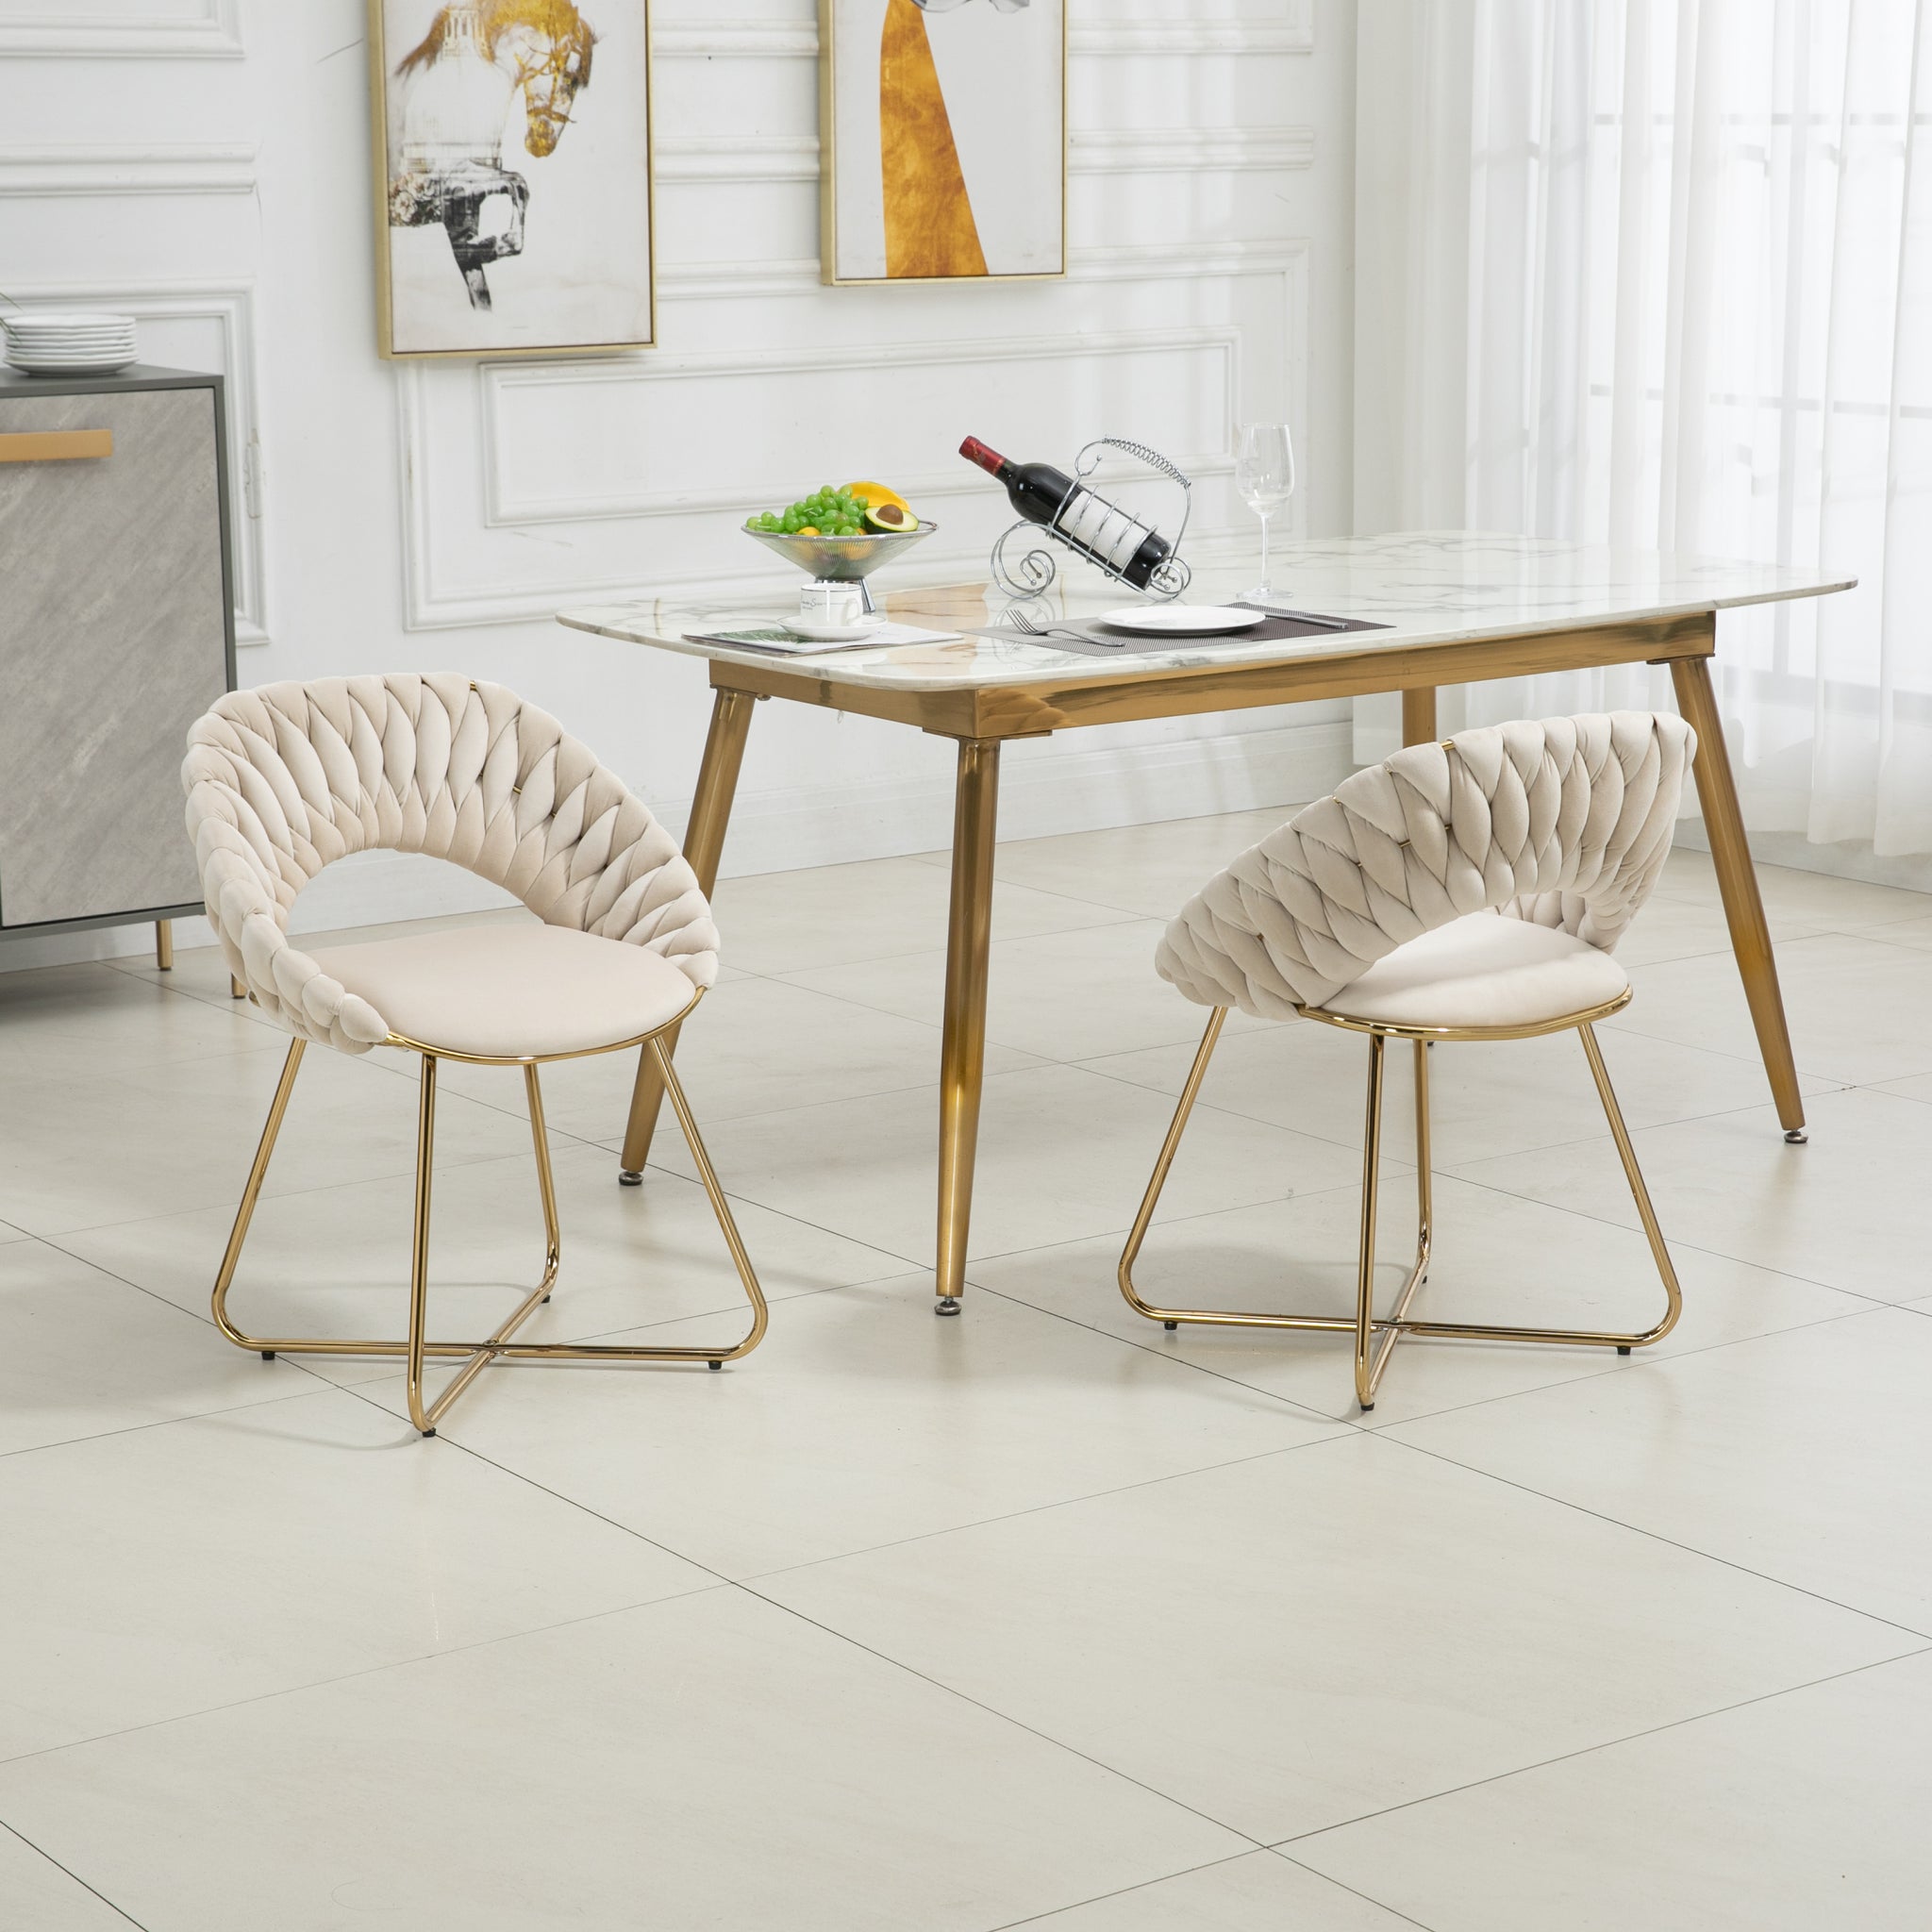 COOLMORE Accent Chairs Set of 2, Velvet Side Chairs beige-velvet